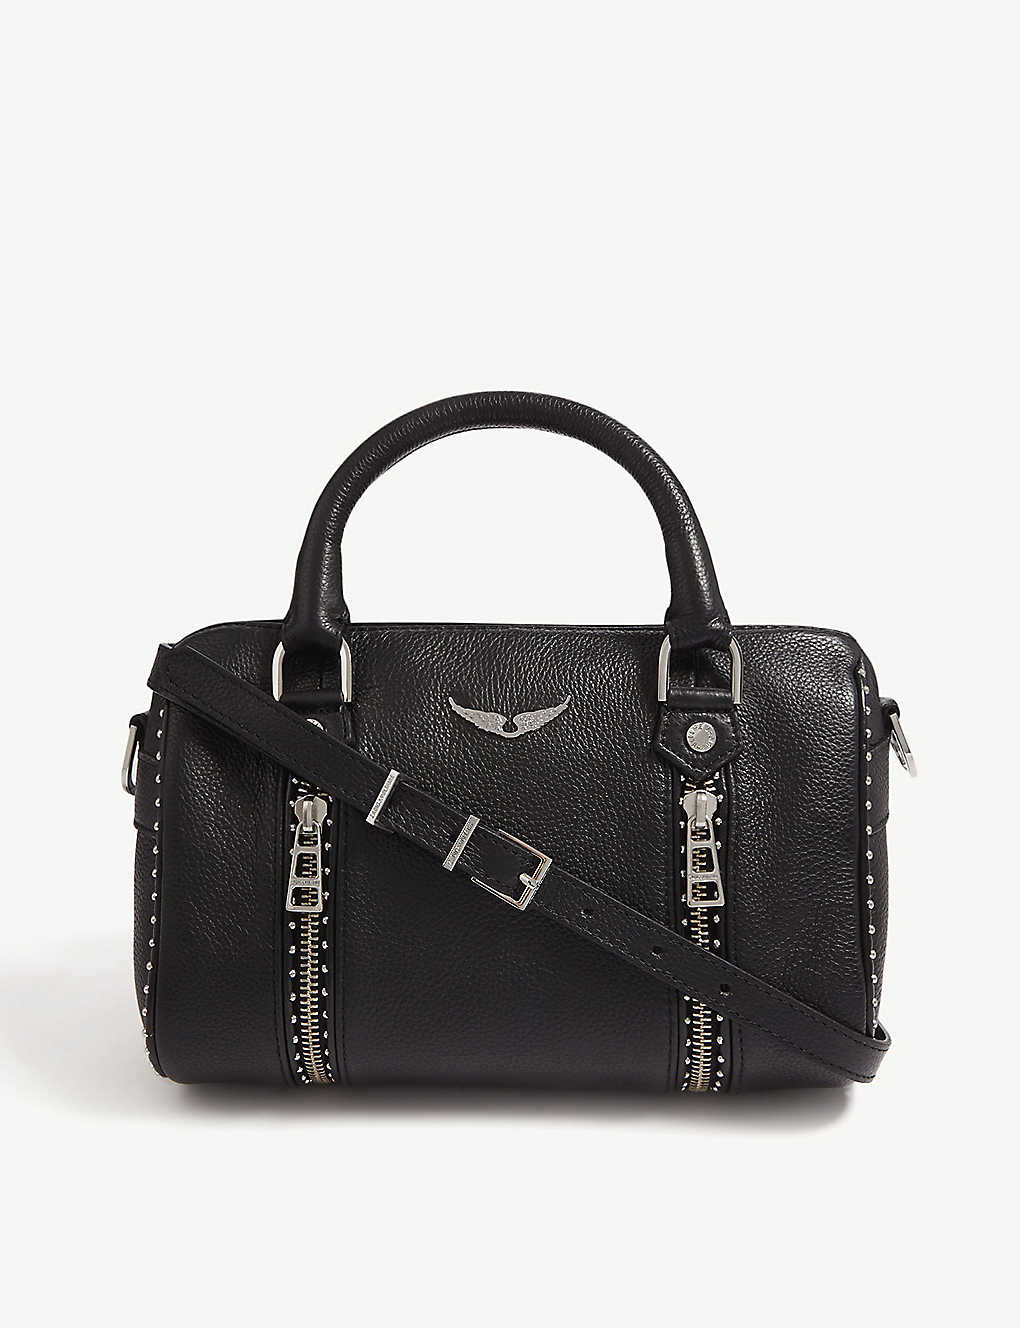 ZADIG&VOLTAIRE - XS Sunny grained leather shoulder bag | Selfridges.com